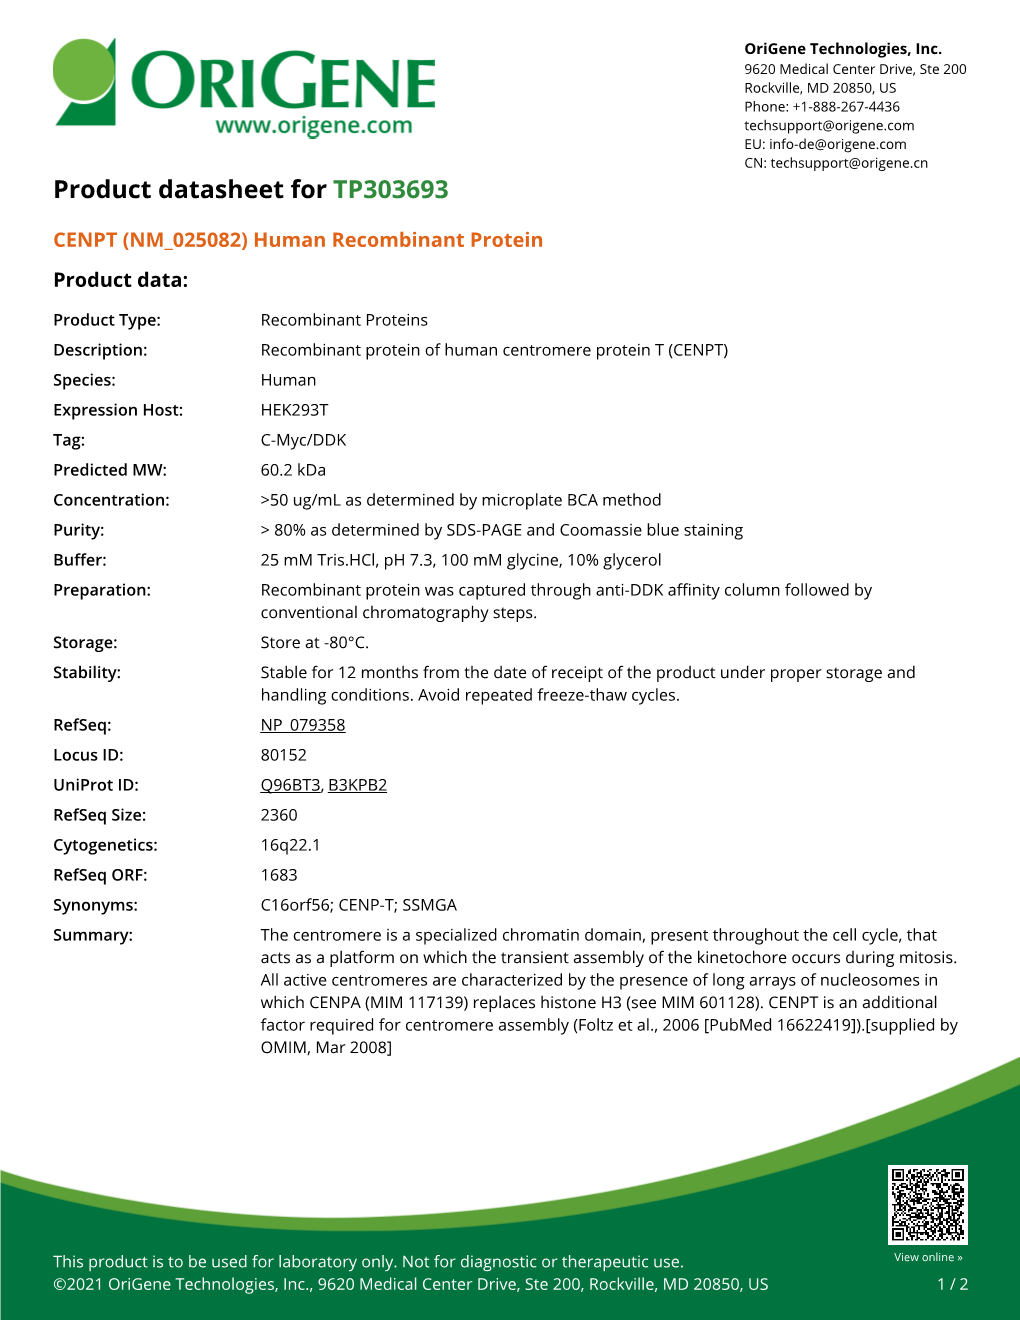 CENPT (NM 025082) Human Recombinant Protein – TP303693